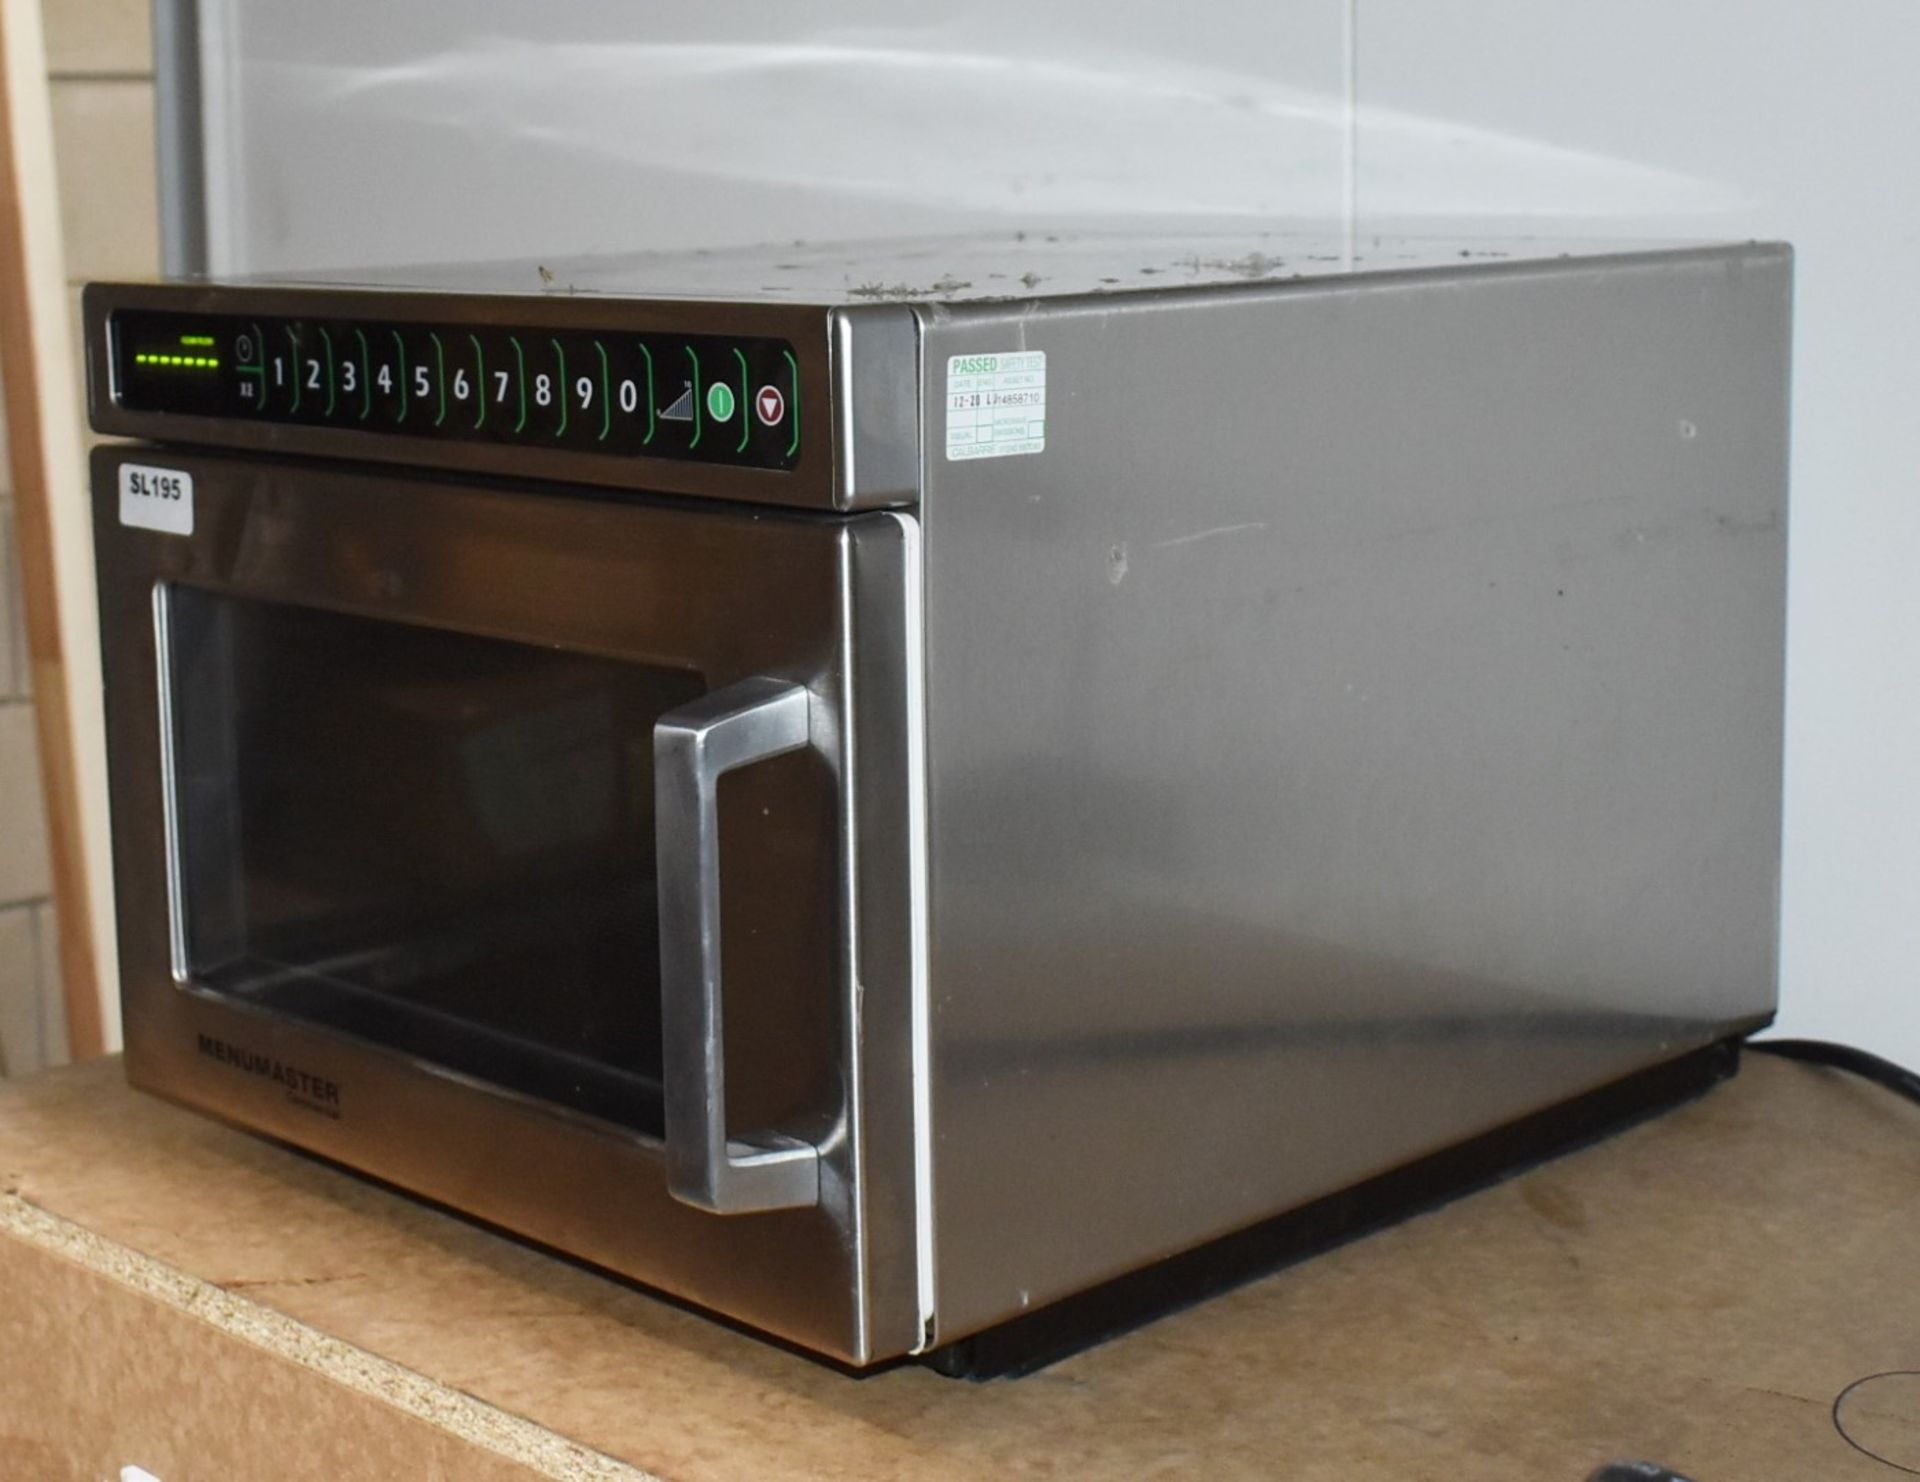 1 x Menumaster Commercial Microwave Oven - Model DEC14E2U - 1.4kW, 13A, 17Ltr - 2018 Model - - Image 3 of 12